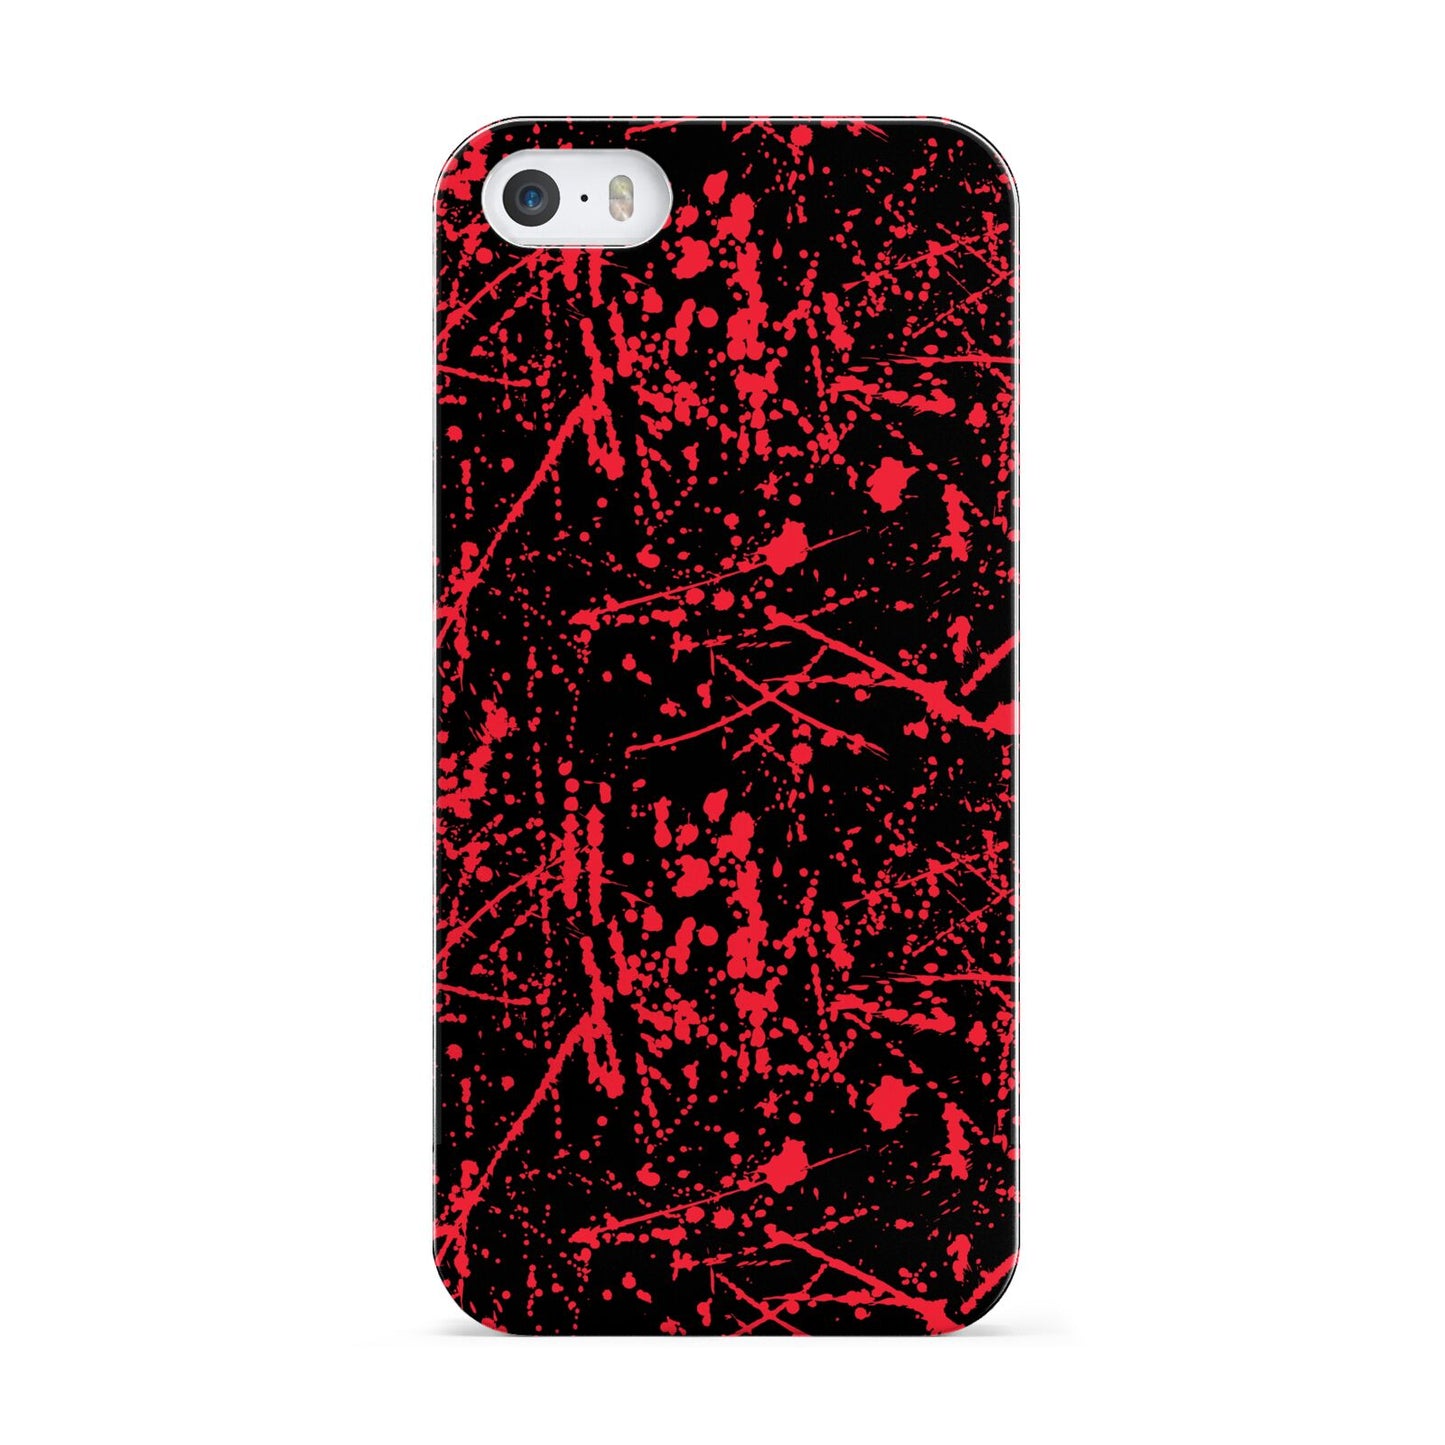 Blood Splatters Apple iPhone 5 Case